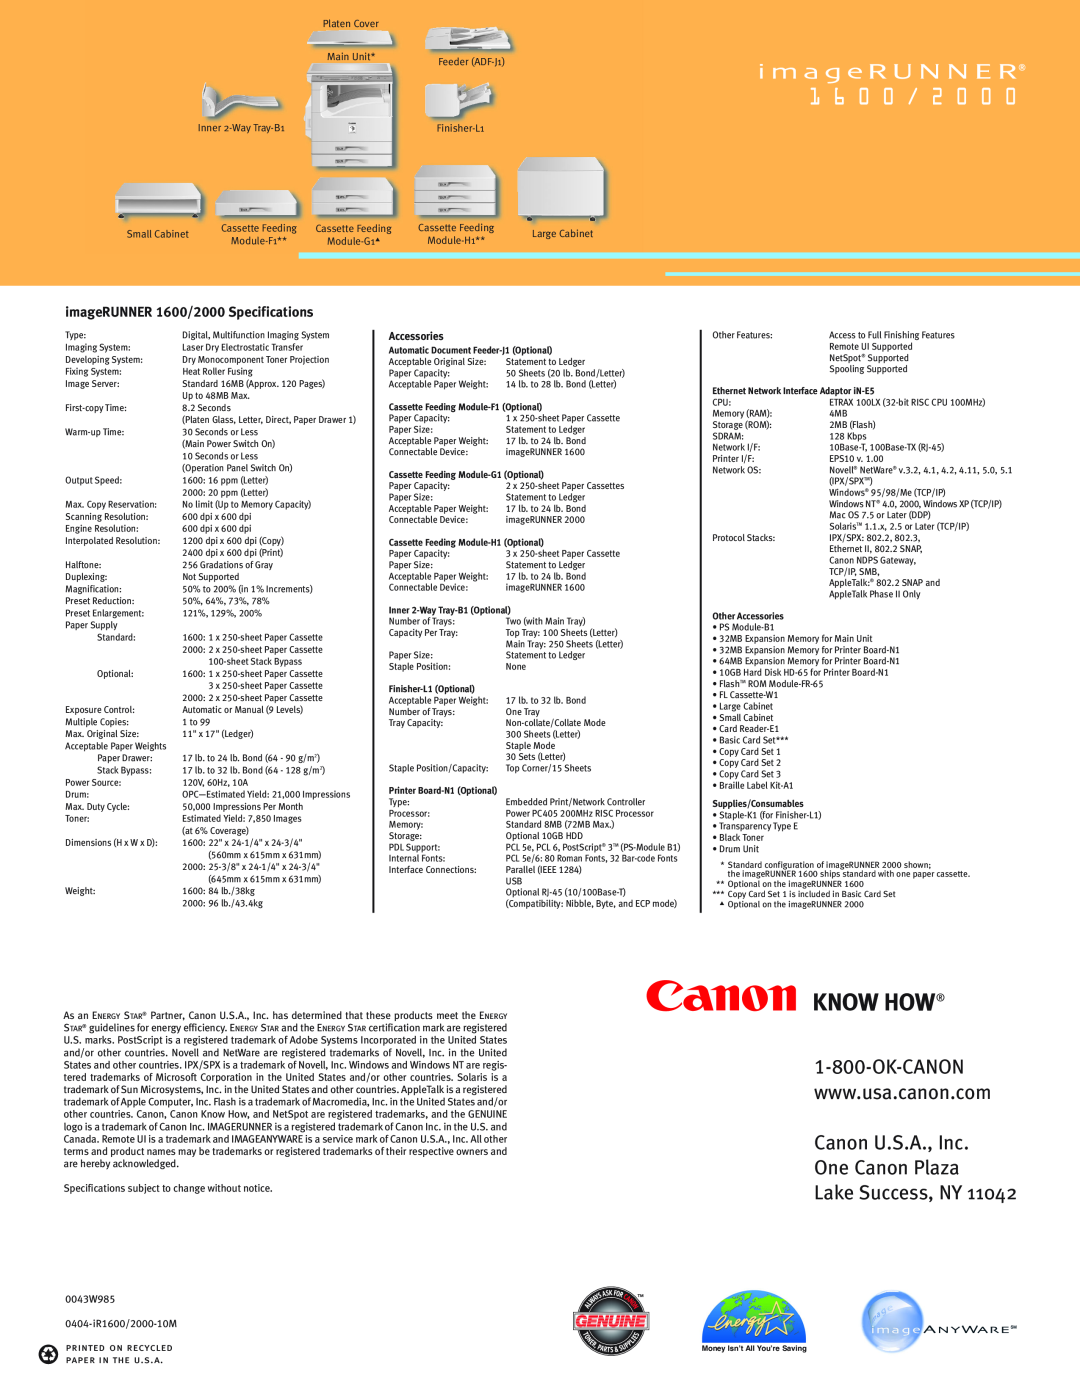 Canon Canon U.S.A., Inc One Canon Plaza Lake Success, NY, imageRUNNER 1600/2000 Specifications, Accessories, Main Unit 